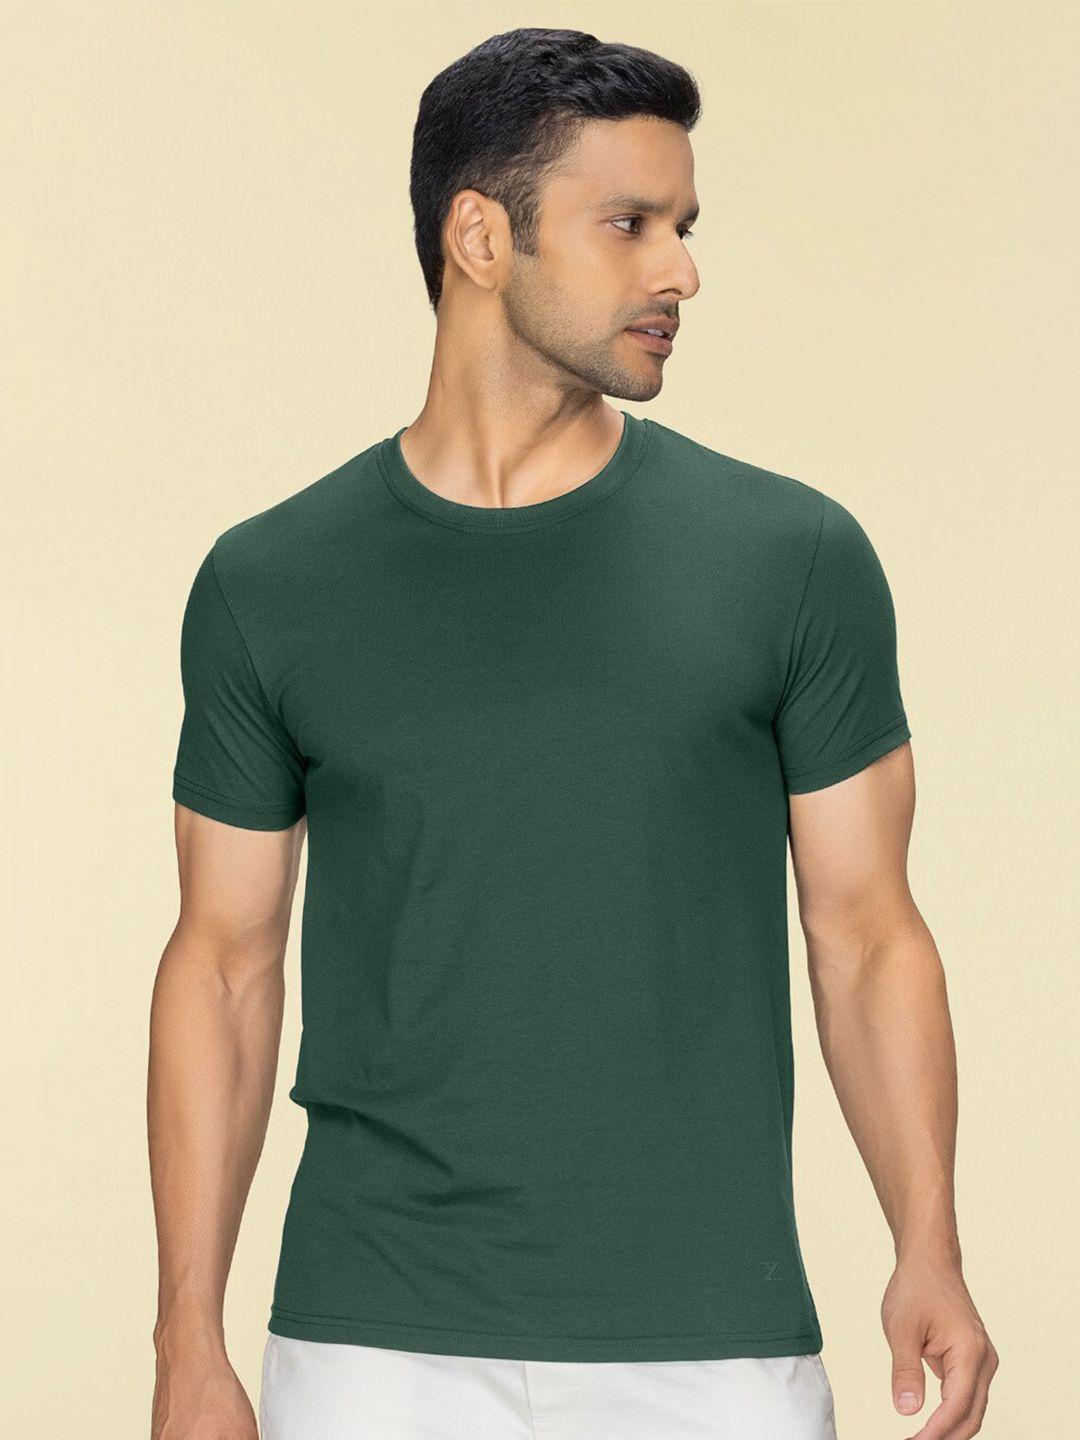 xyxx round neck pure cotton t-shirt